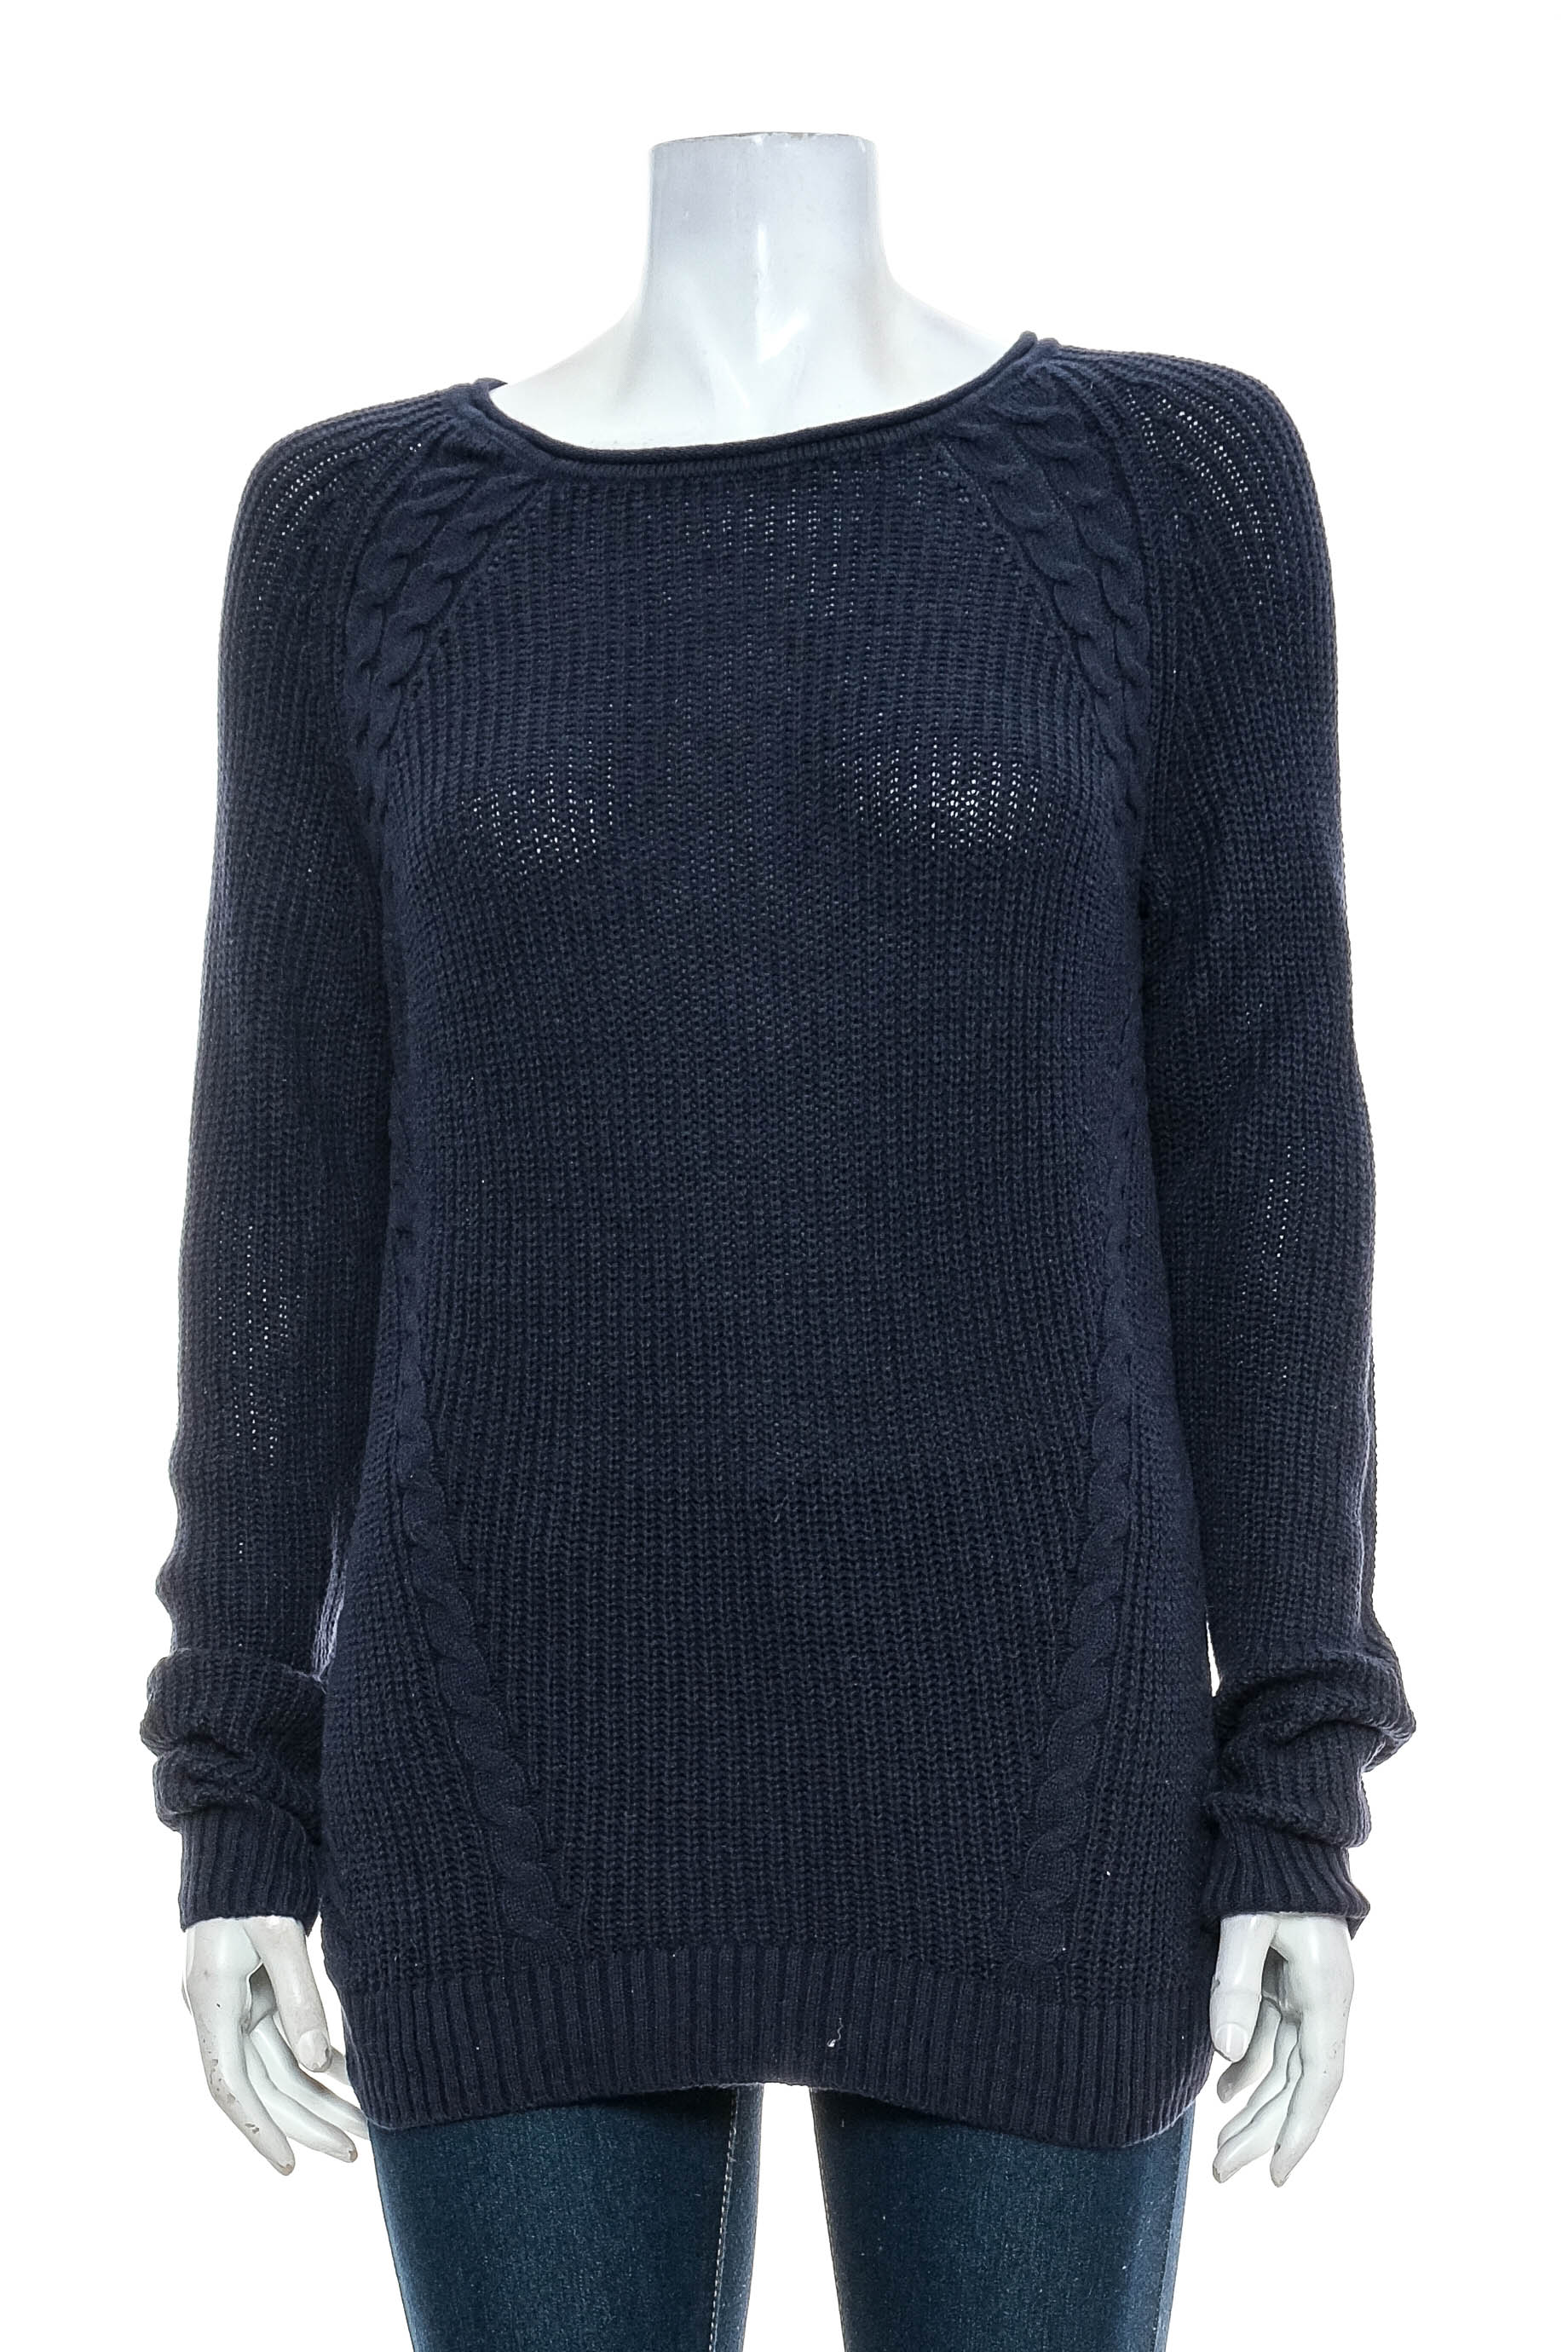 Women's sweater - TALBOTS - 0